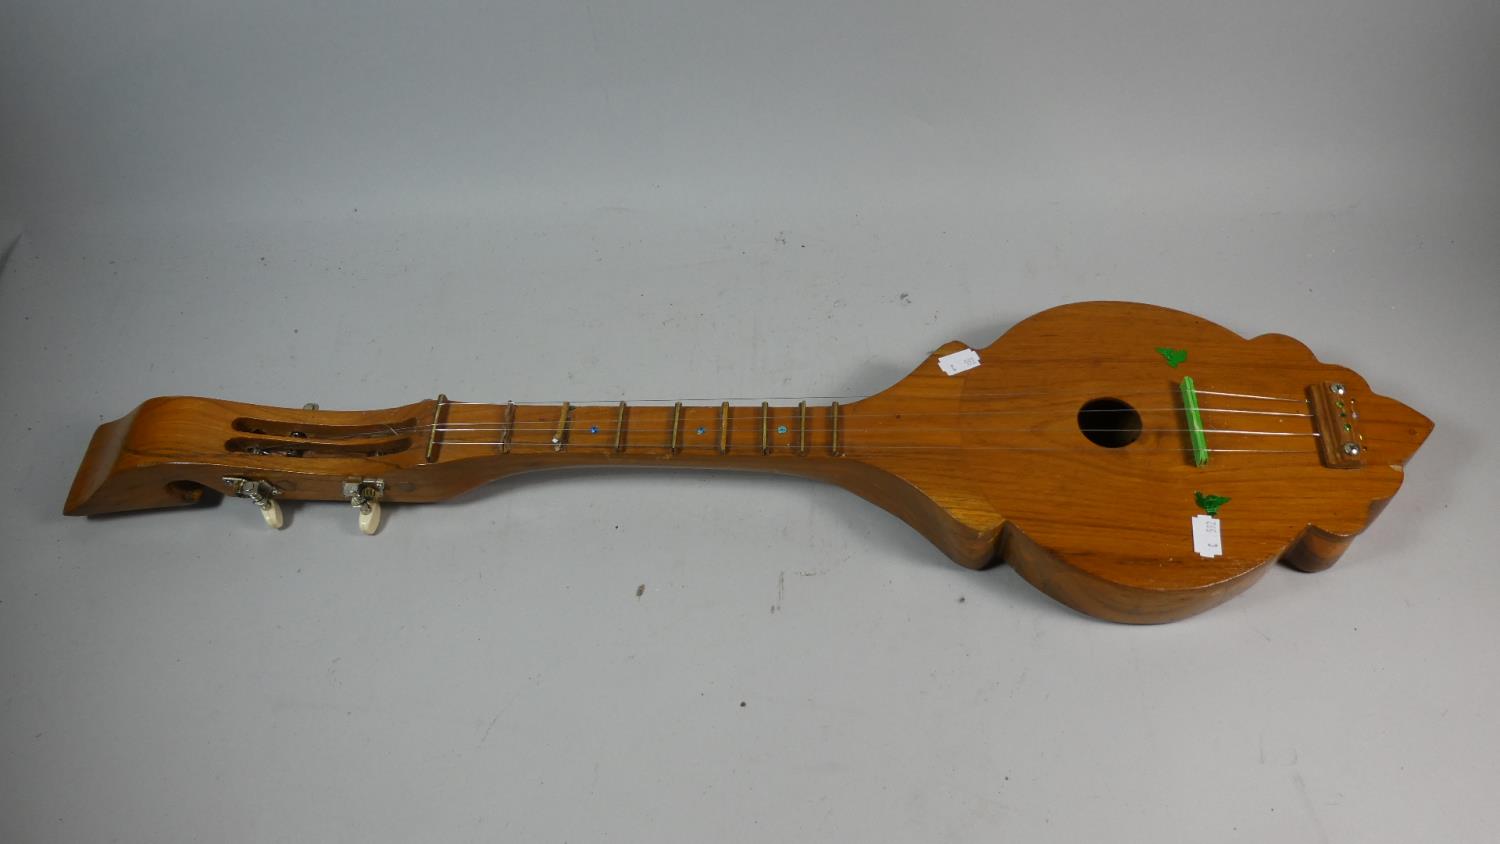 A Wooden Four String Musical Dulcimer